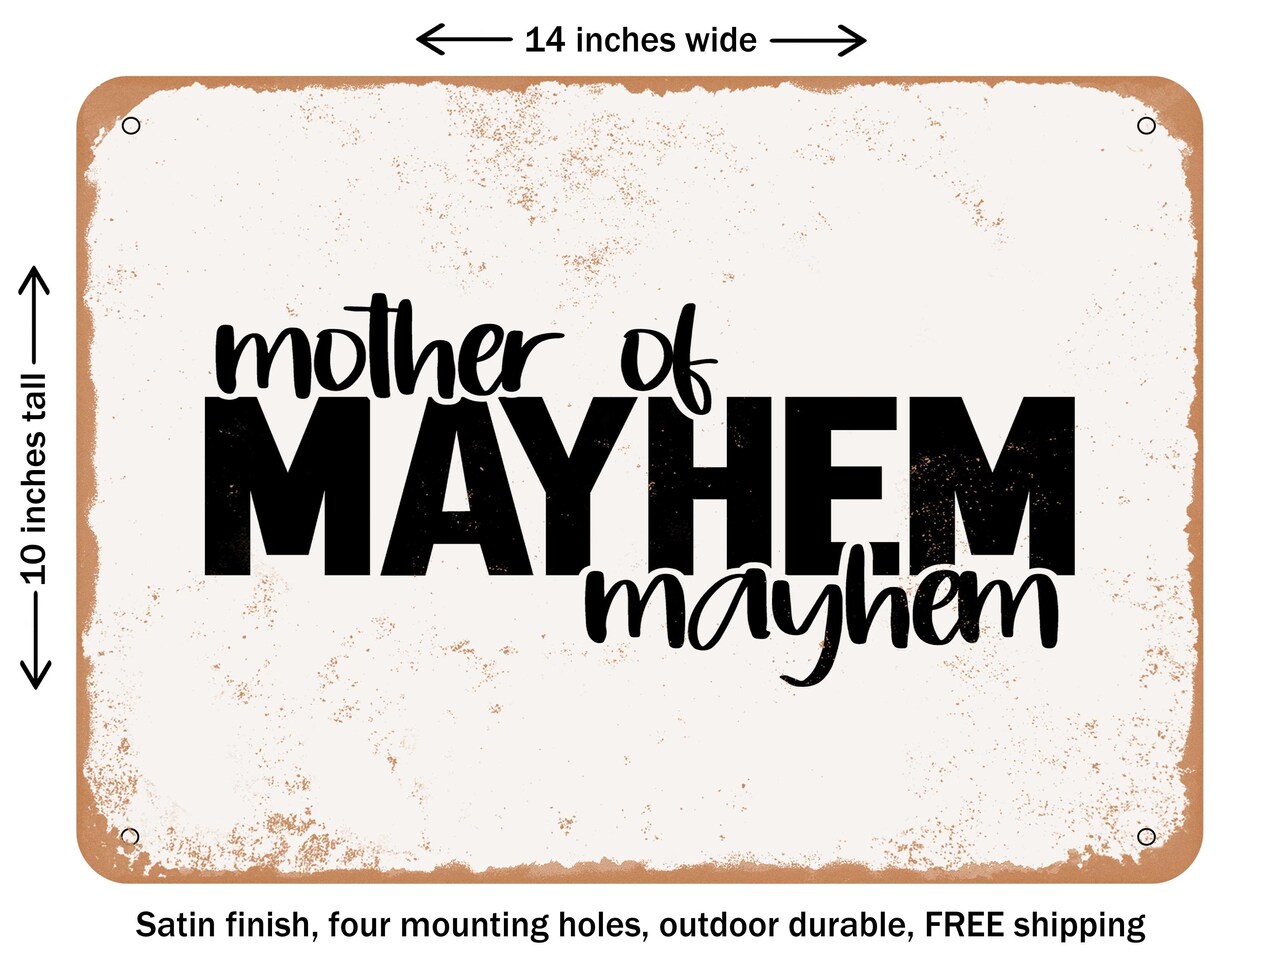 DECORATIVE METAL SIGN - Mother of Mayhem Mayhem - Vintage Rusty Look